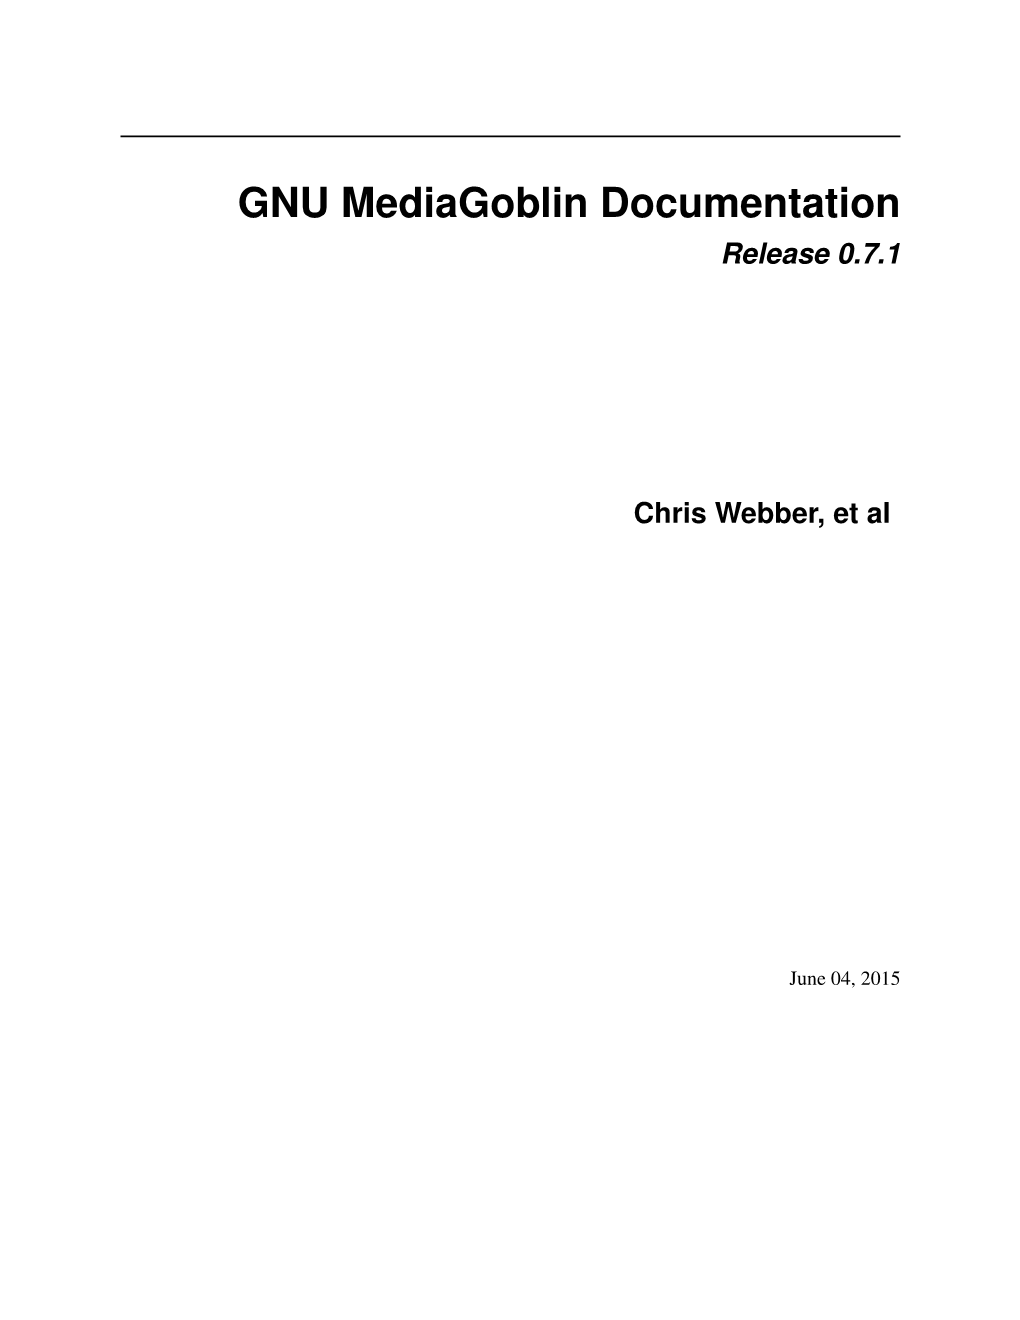 GNU Mediagoblin Documentation Release 0.7.1 Chris Webber, Et Al